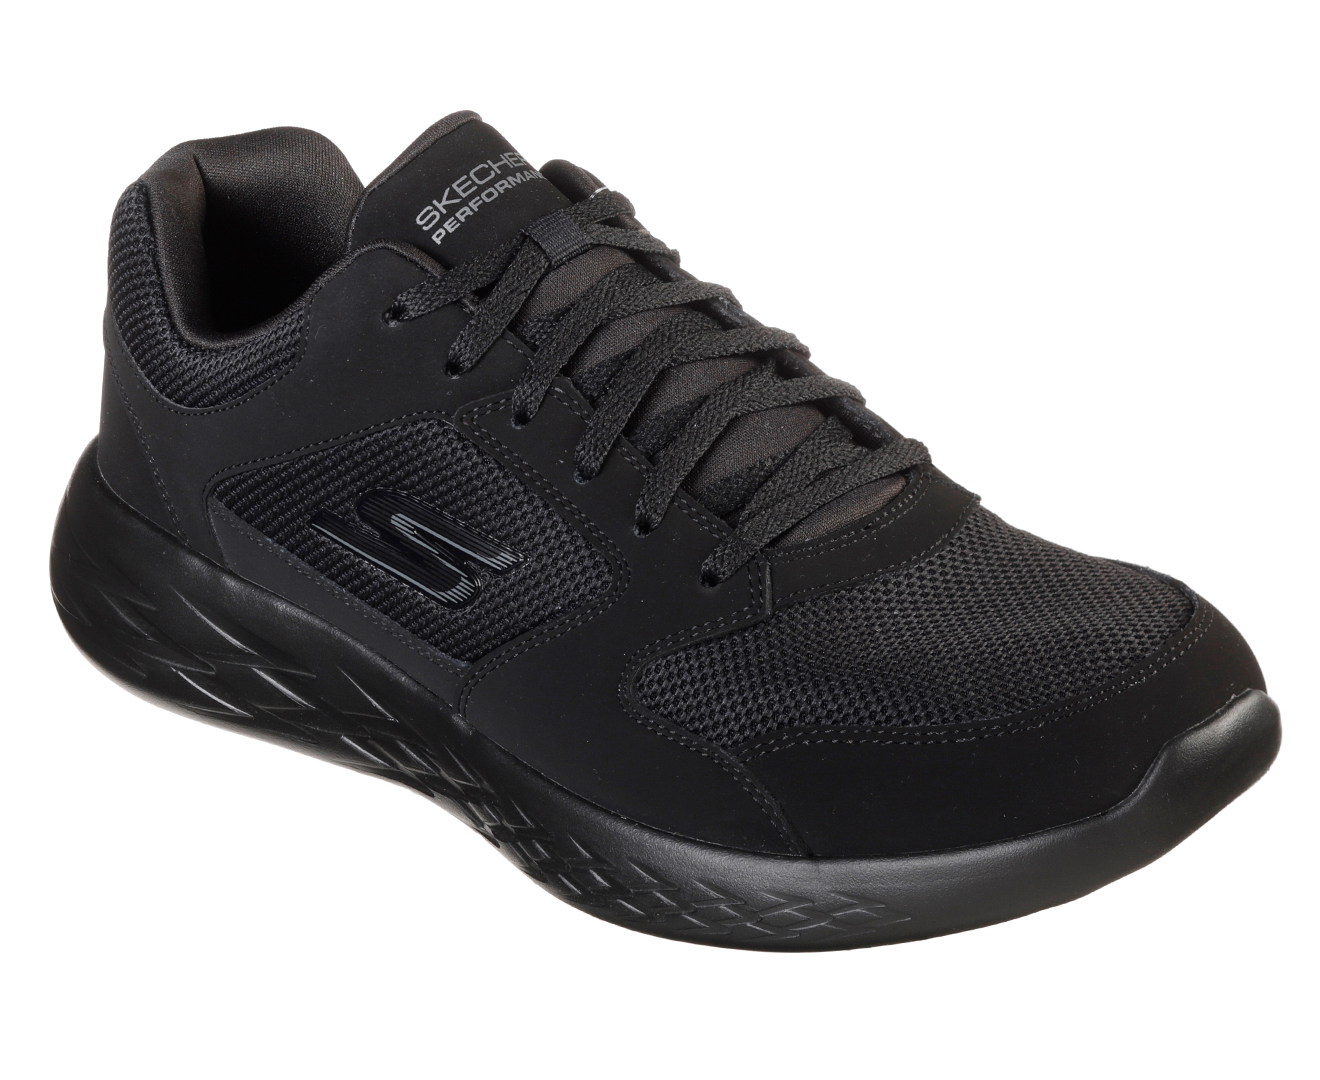 Skechers Men's Go Run 600 Shoe - Black/Black | Catch.com.au